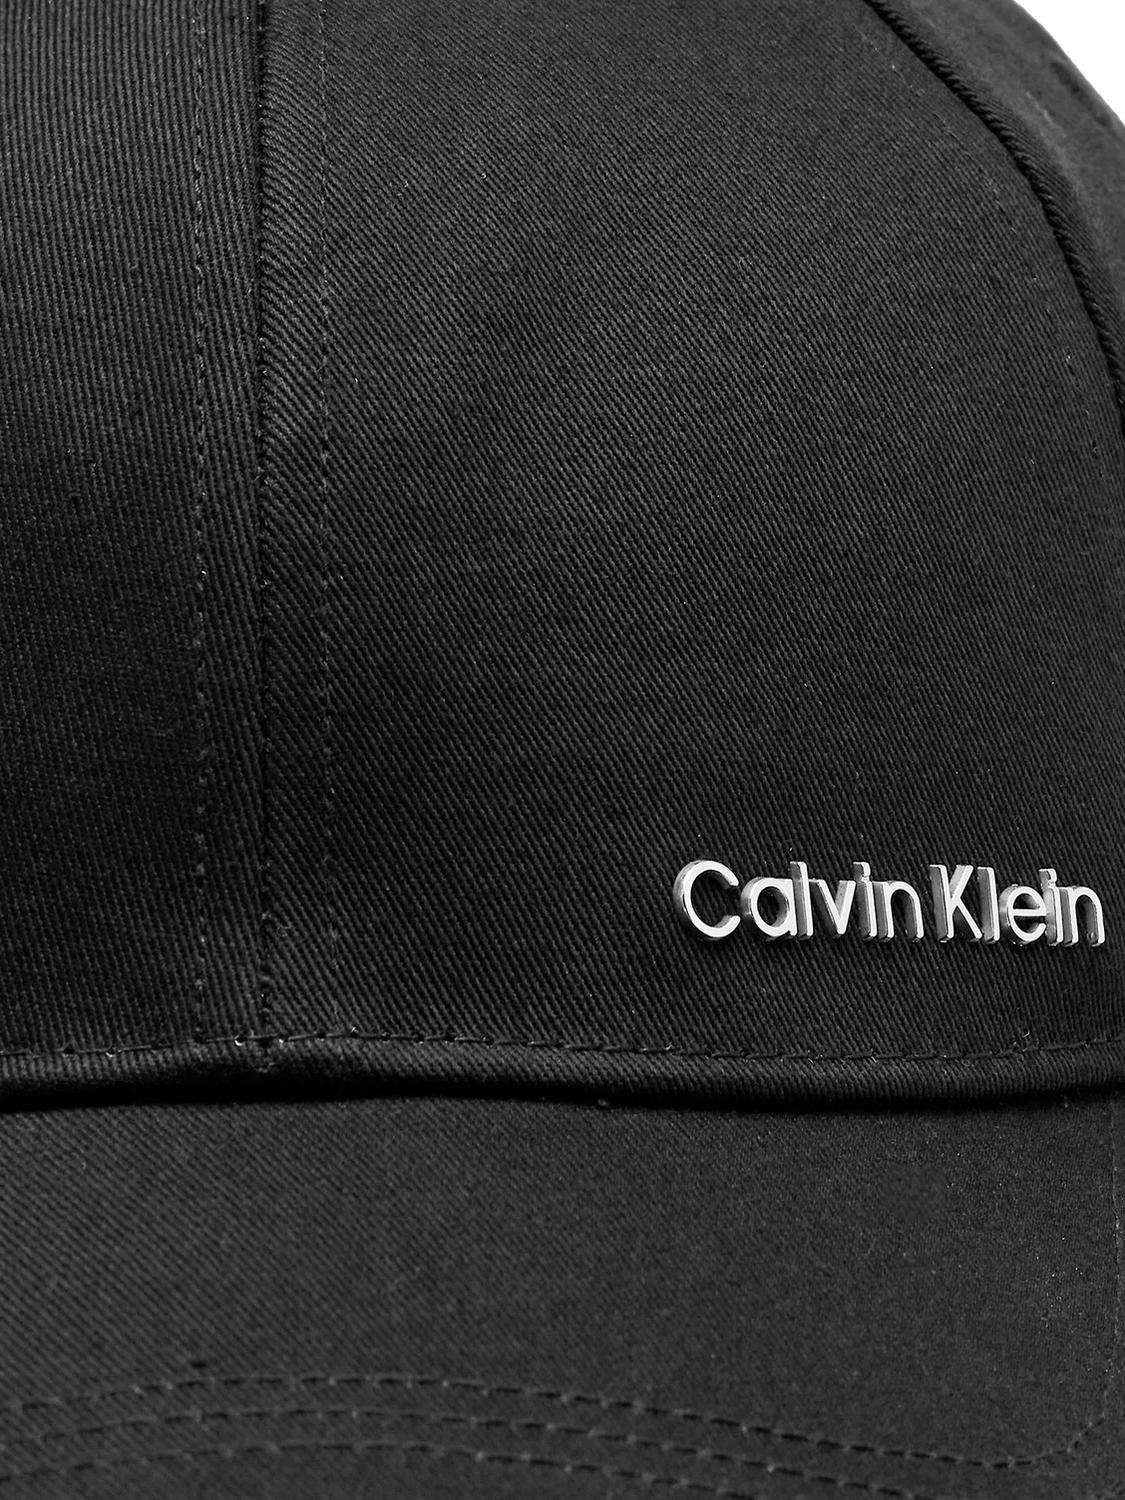 Calvin Klein Metal Lettering Bb Outlet Prices! - Buy Baseball Ck At Black Hat